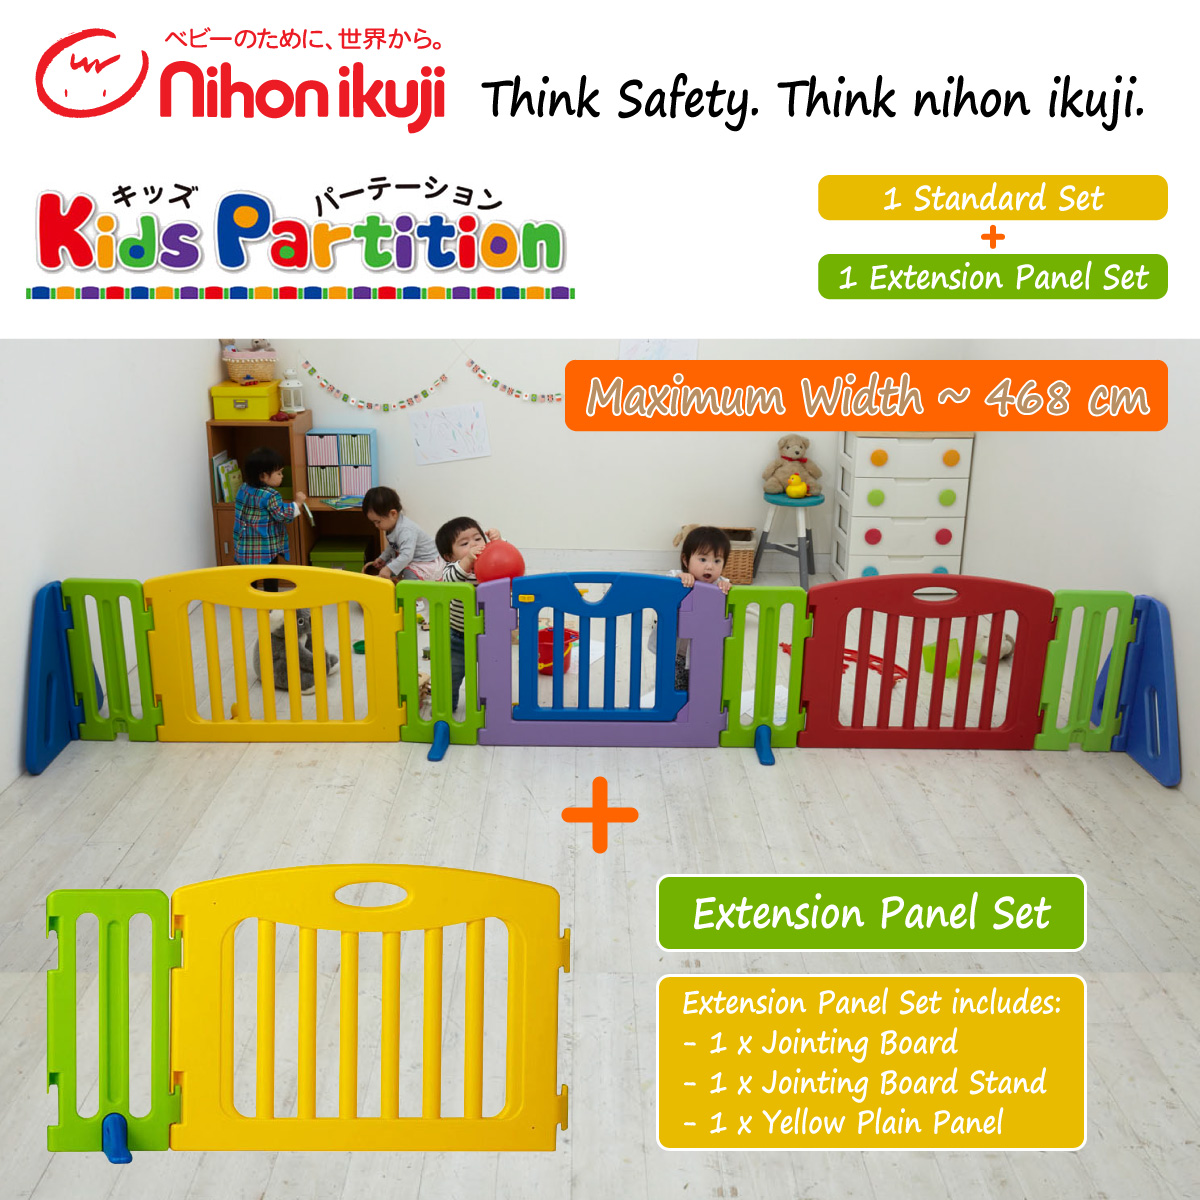 nihon ikuji Kids Partition (Maximum Width of 468 cm)